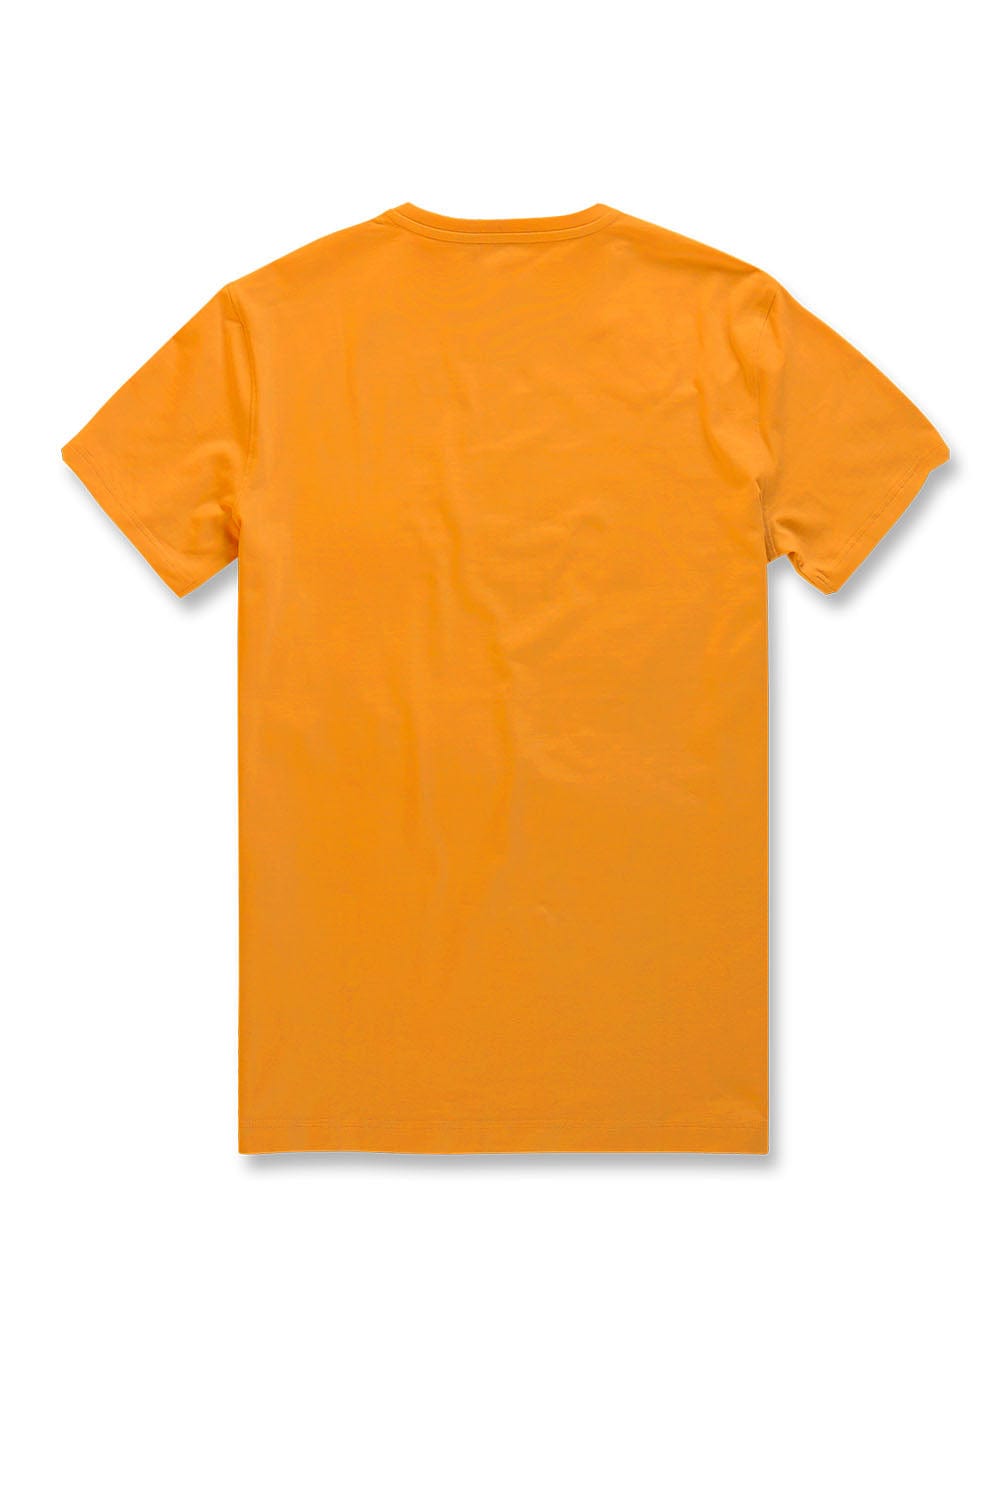 JC Big Men Big Men's Time's Up T-Shirt (Orange)